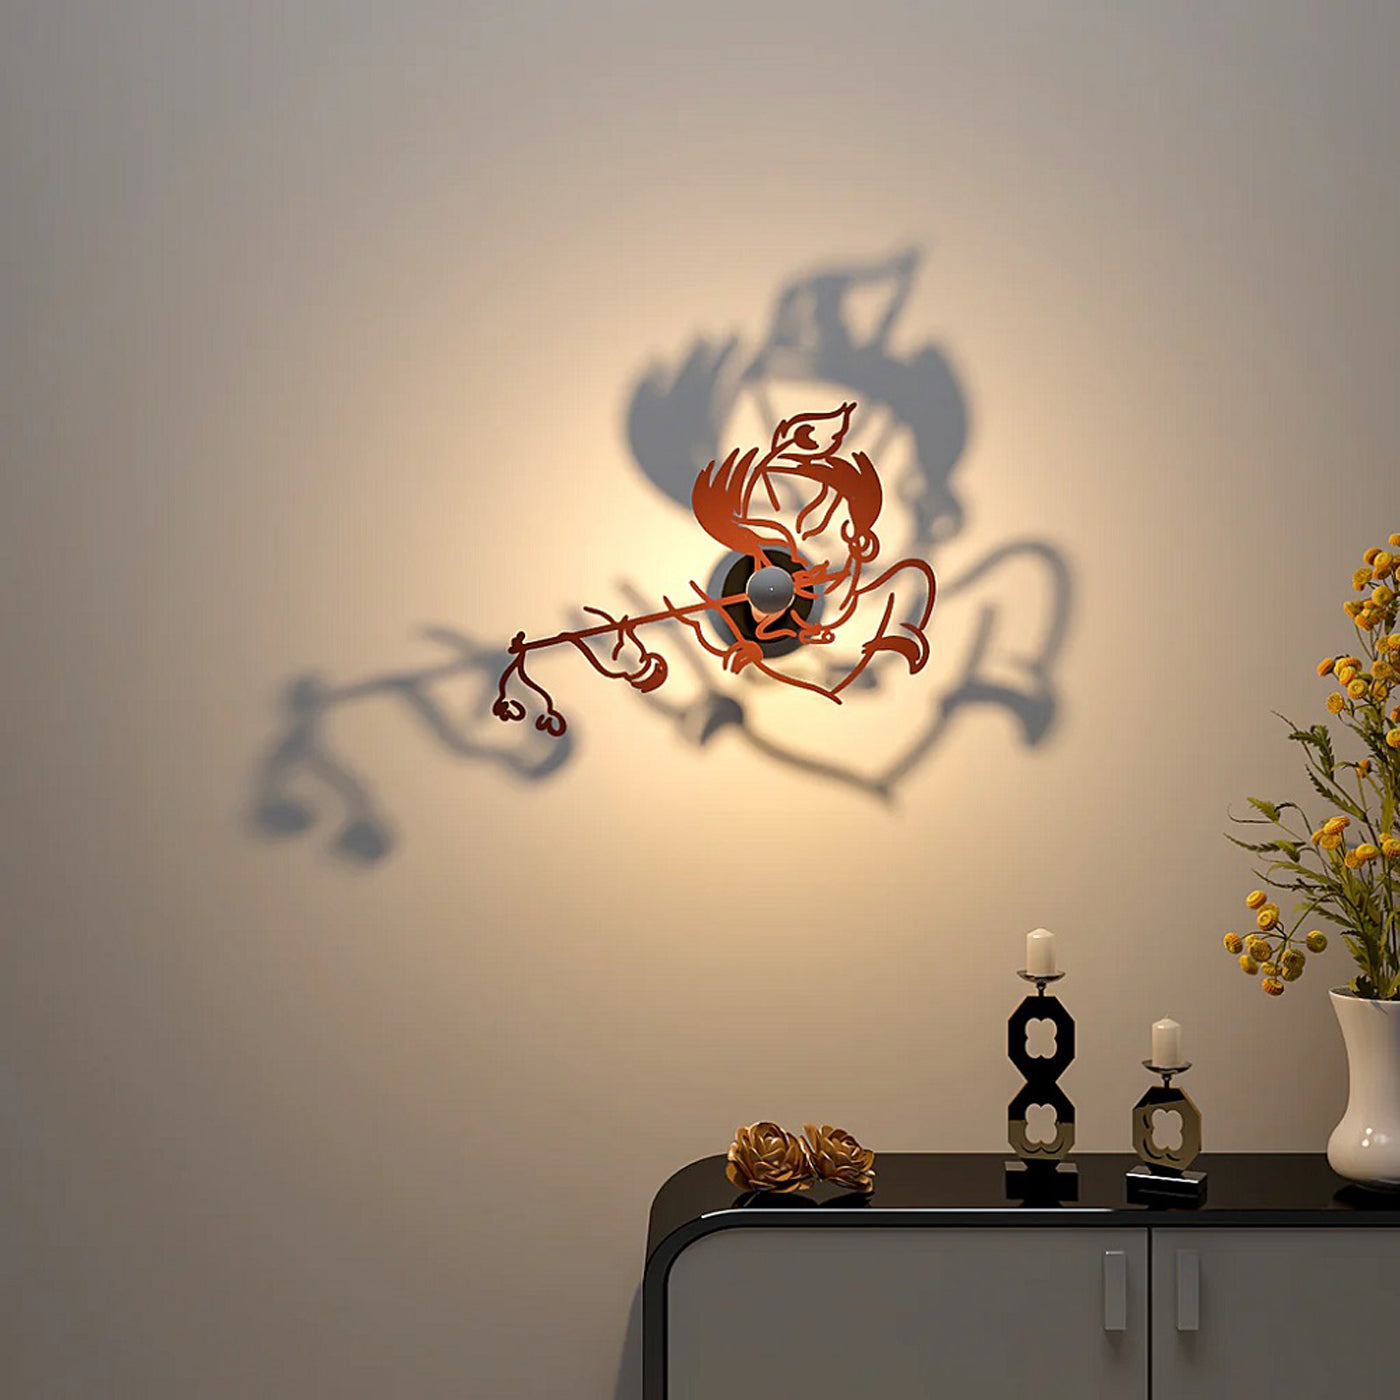 Murli Krishna Shadow lamp for Home / Office wall decor